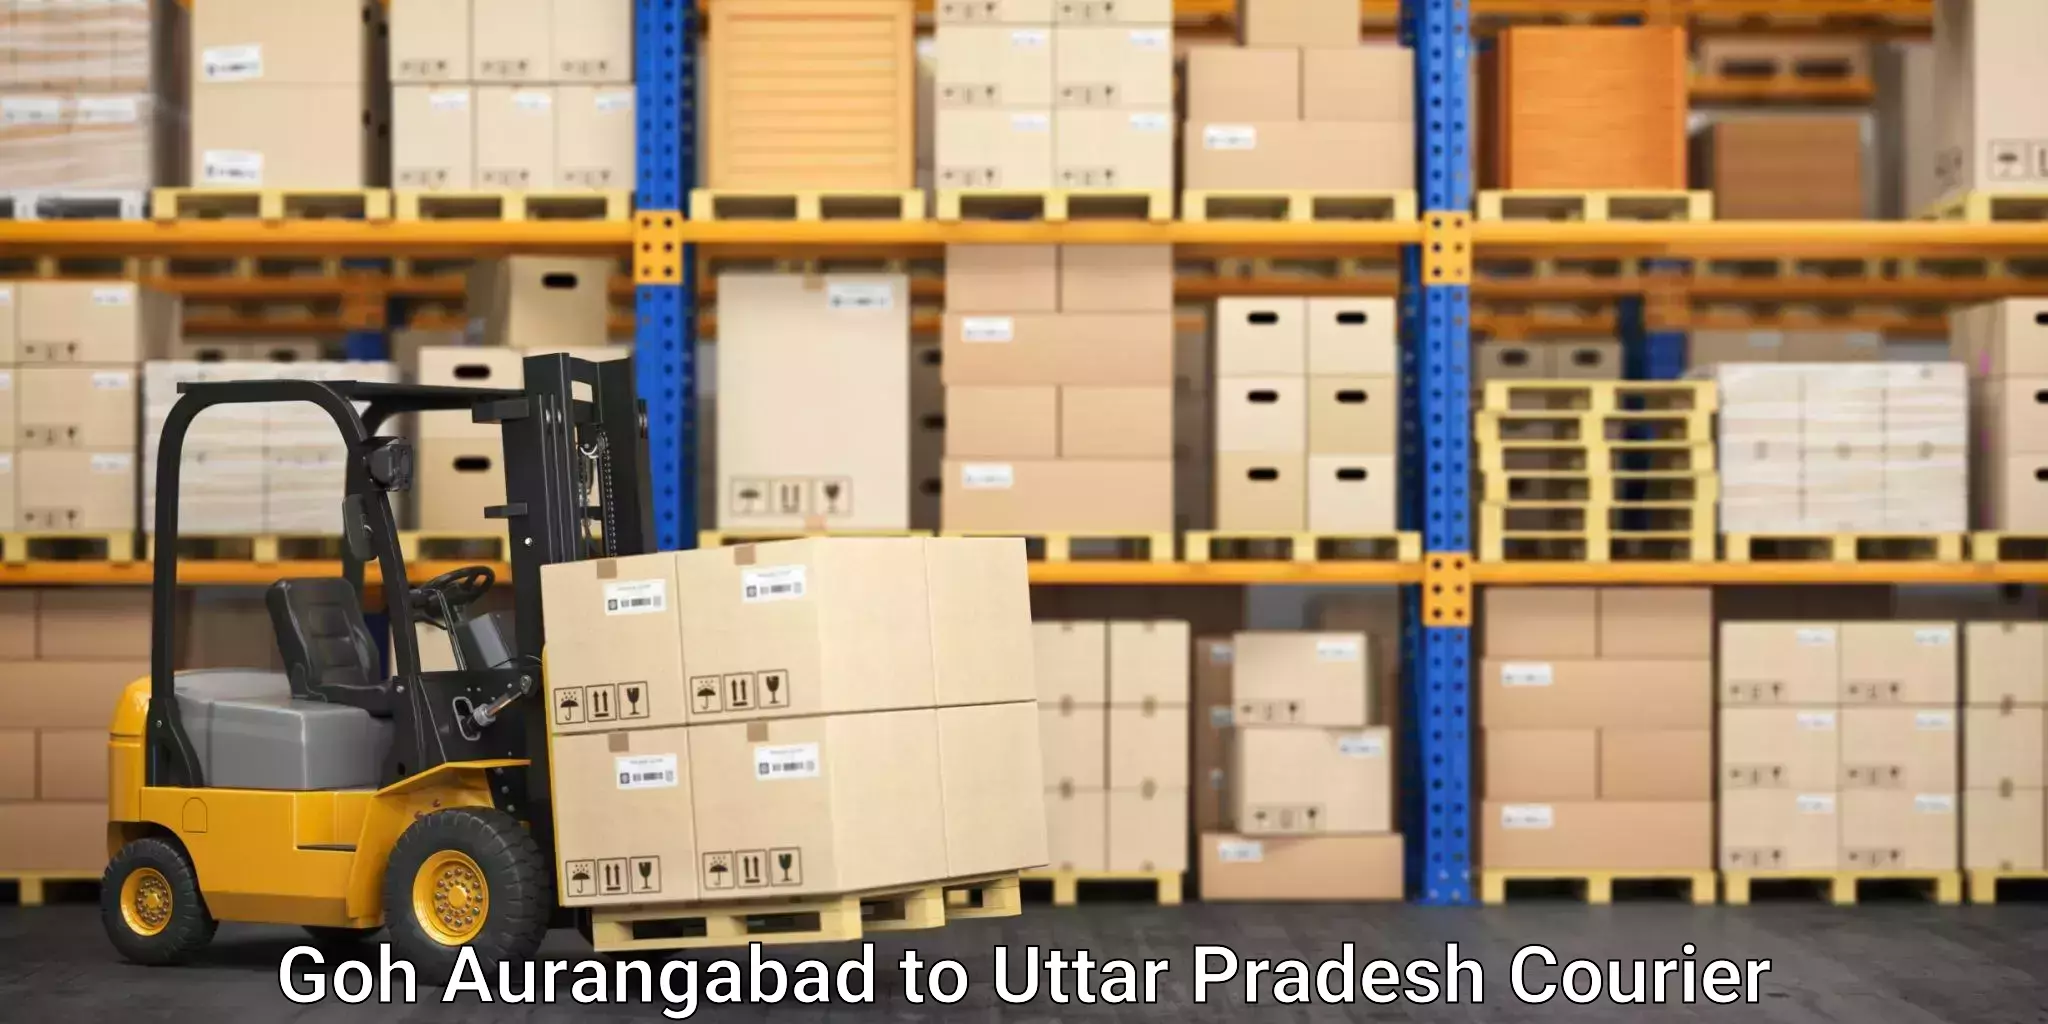 Furniture moving specialists Goh Aurangabad to Uttar Pradesh